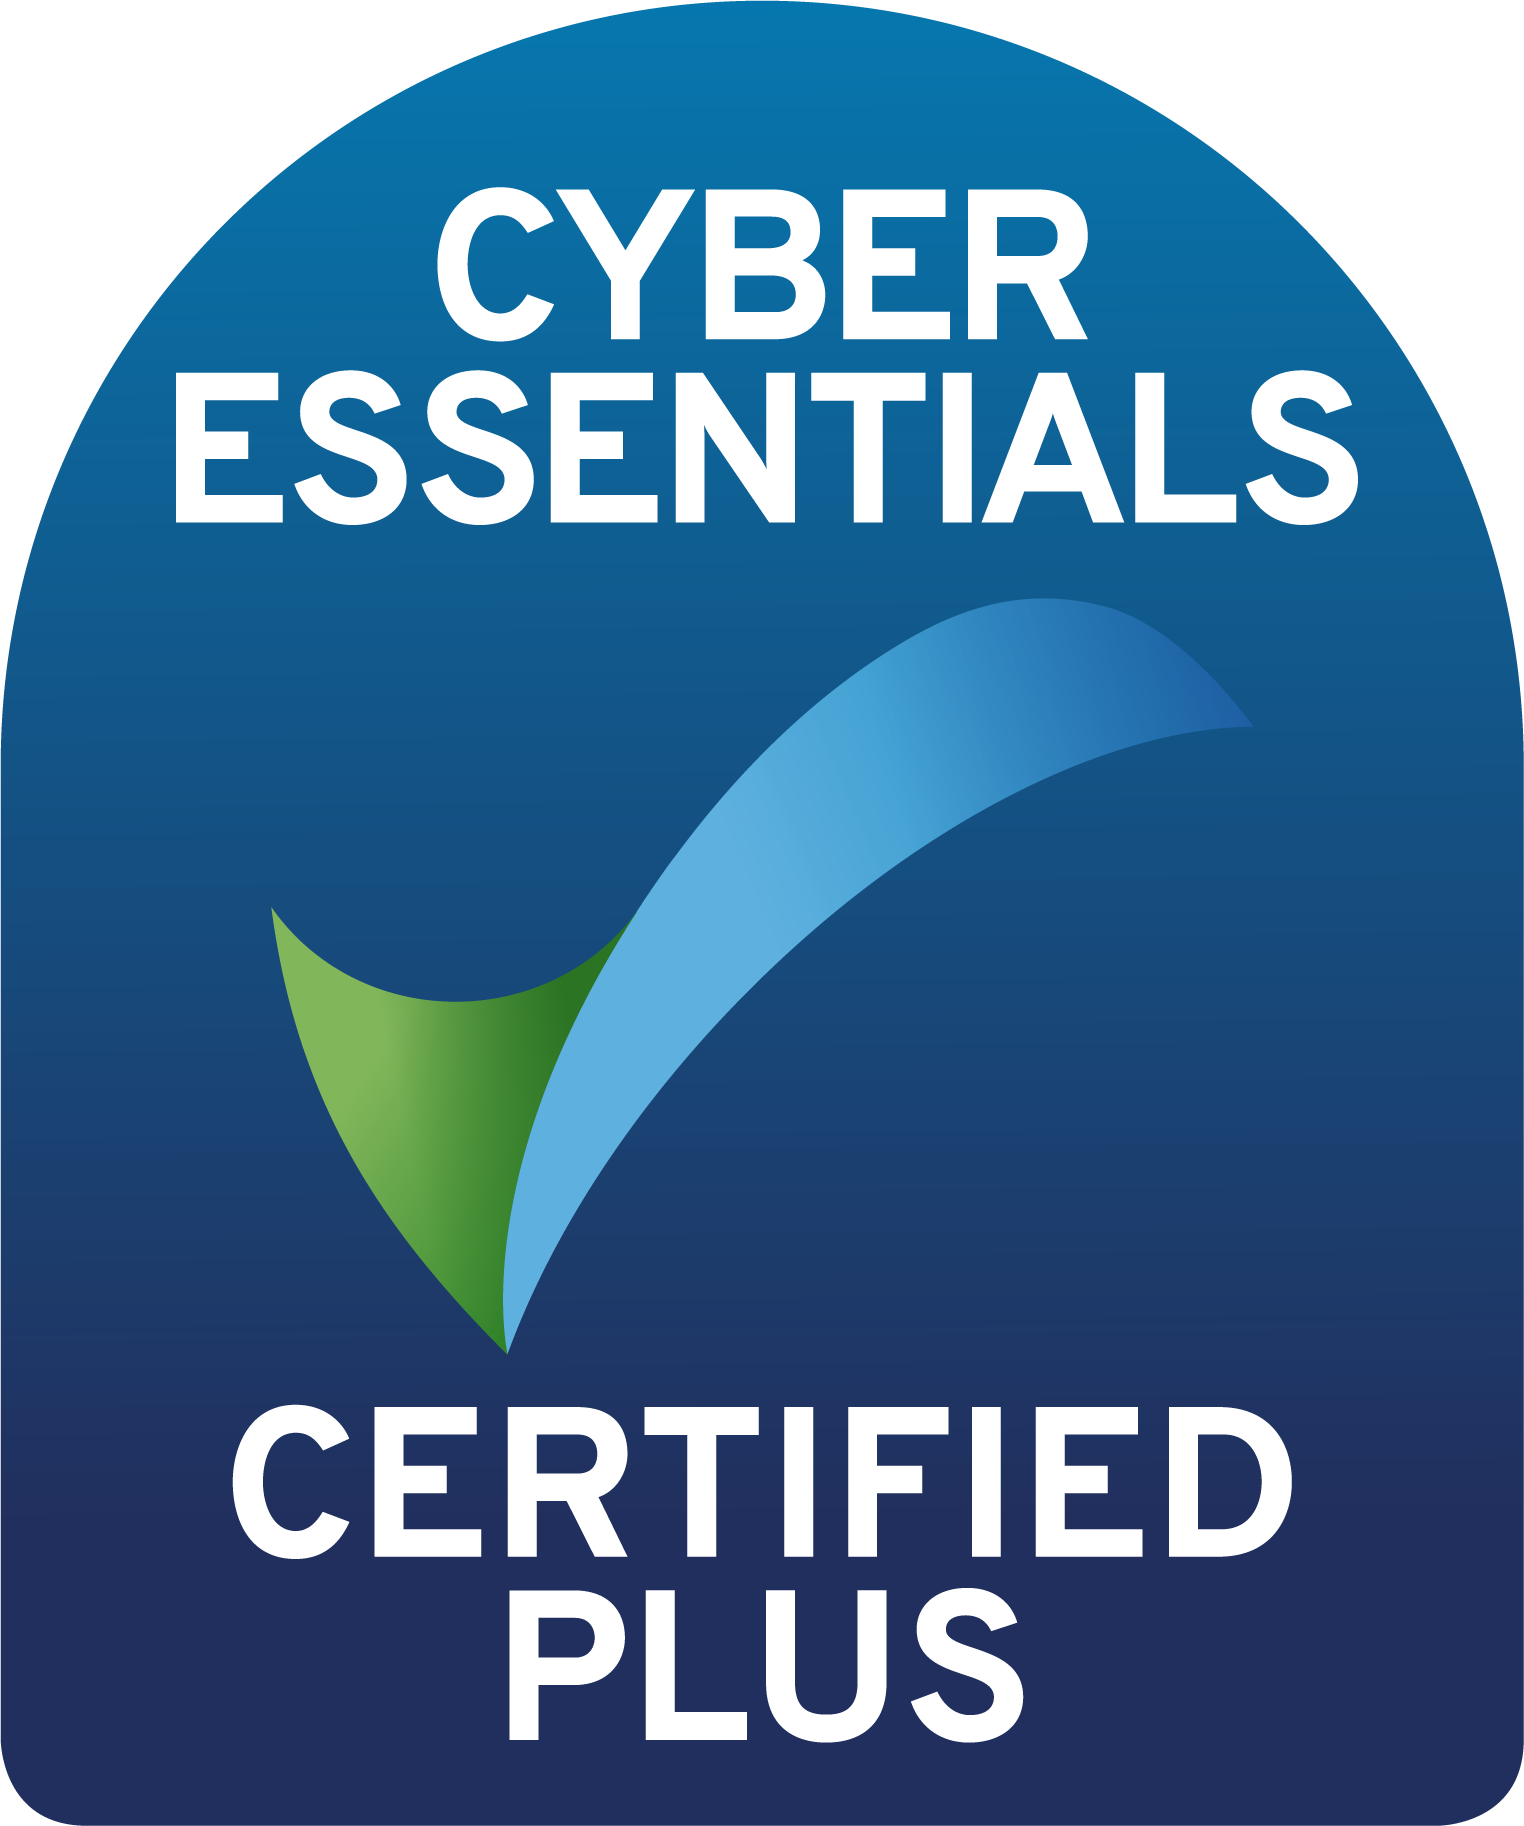 Cyber Essentials certification mark.